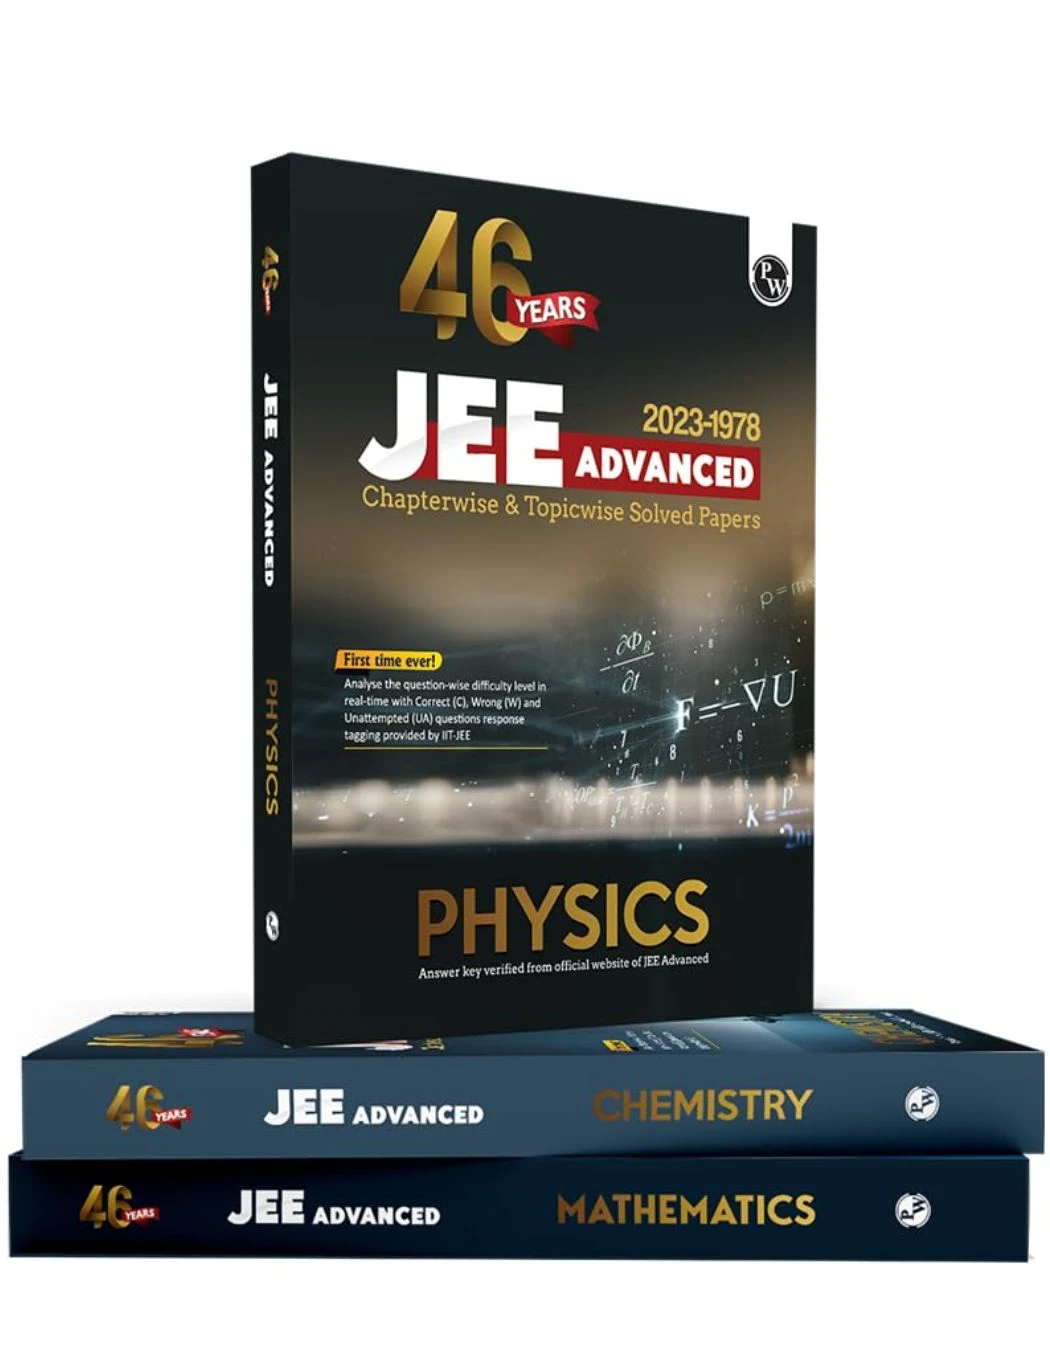 PW 46 Years Physics, Mathematics and Chemistry Combo Set!